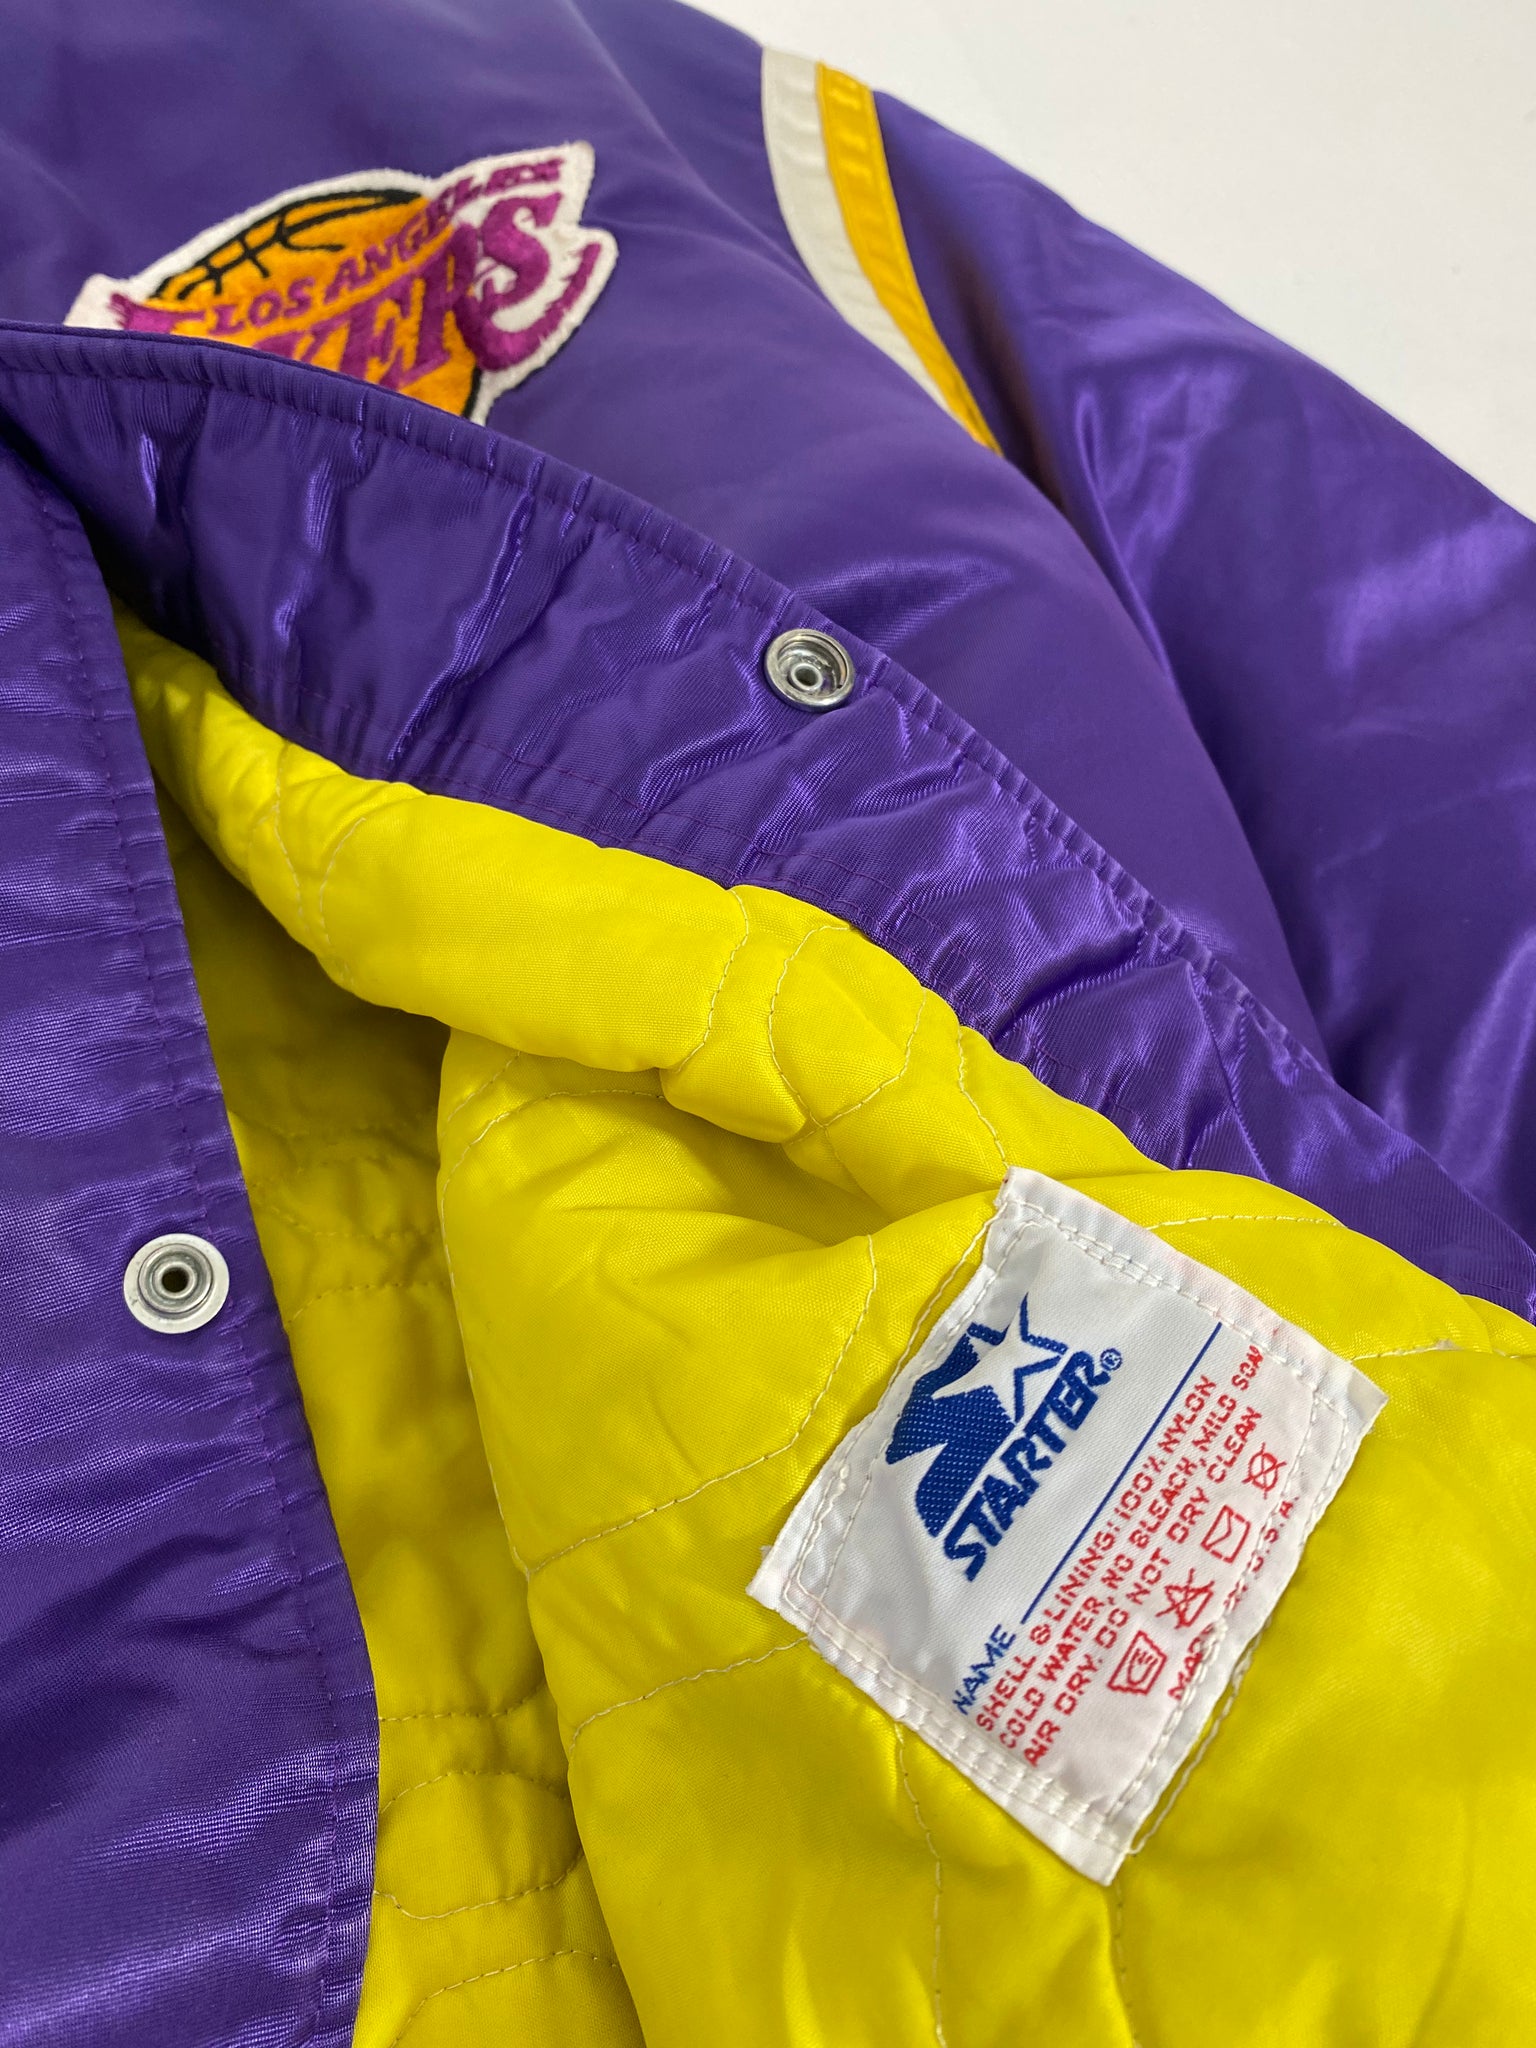 Vintage 80s LOS ANGELES LAKERS NBA Starter Purple Nylon Jacket L